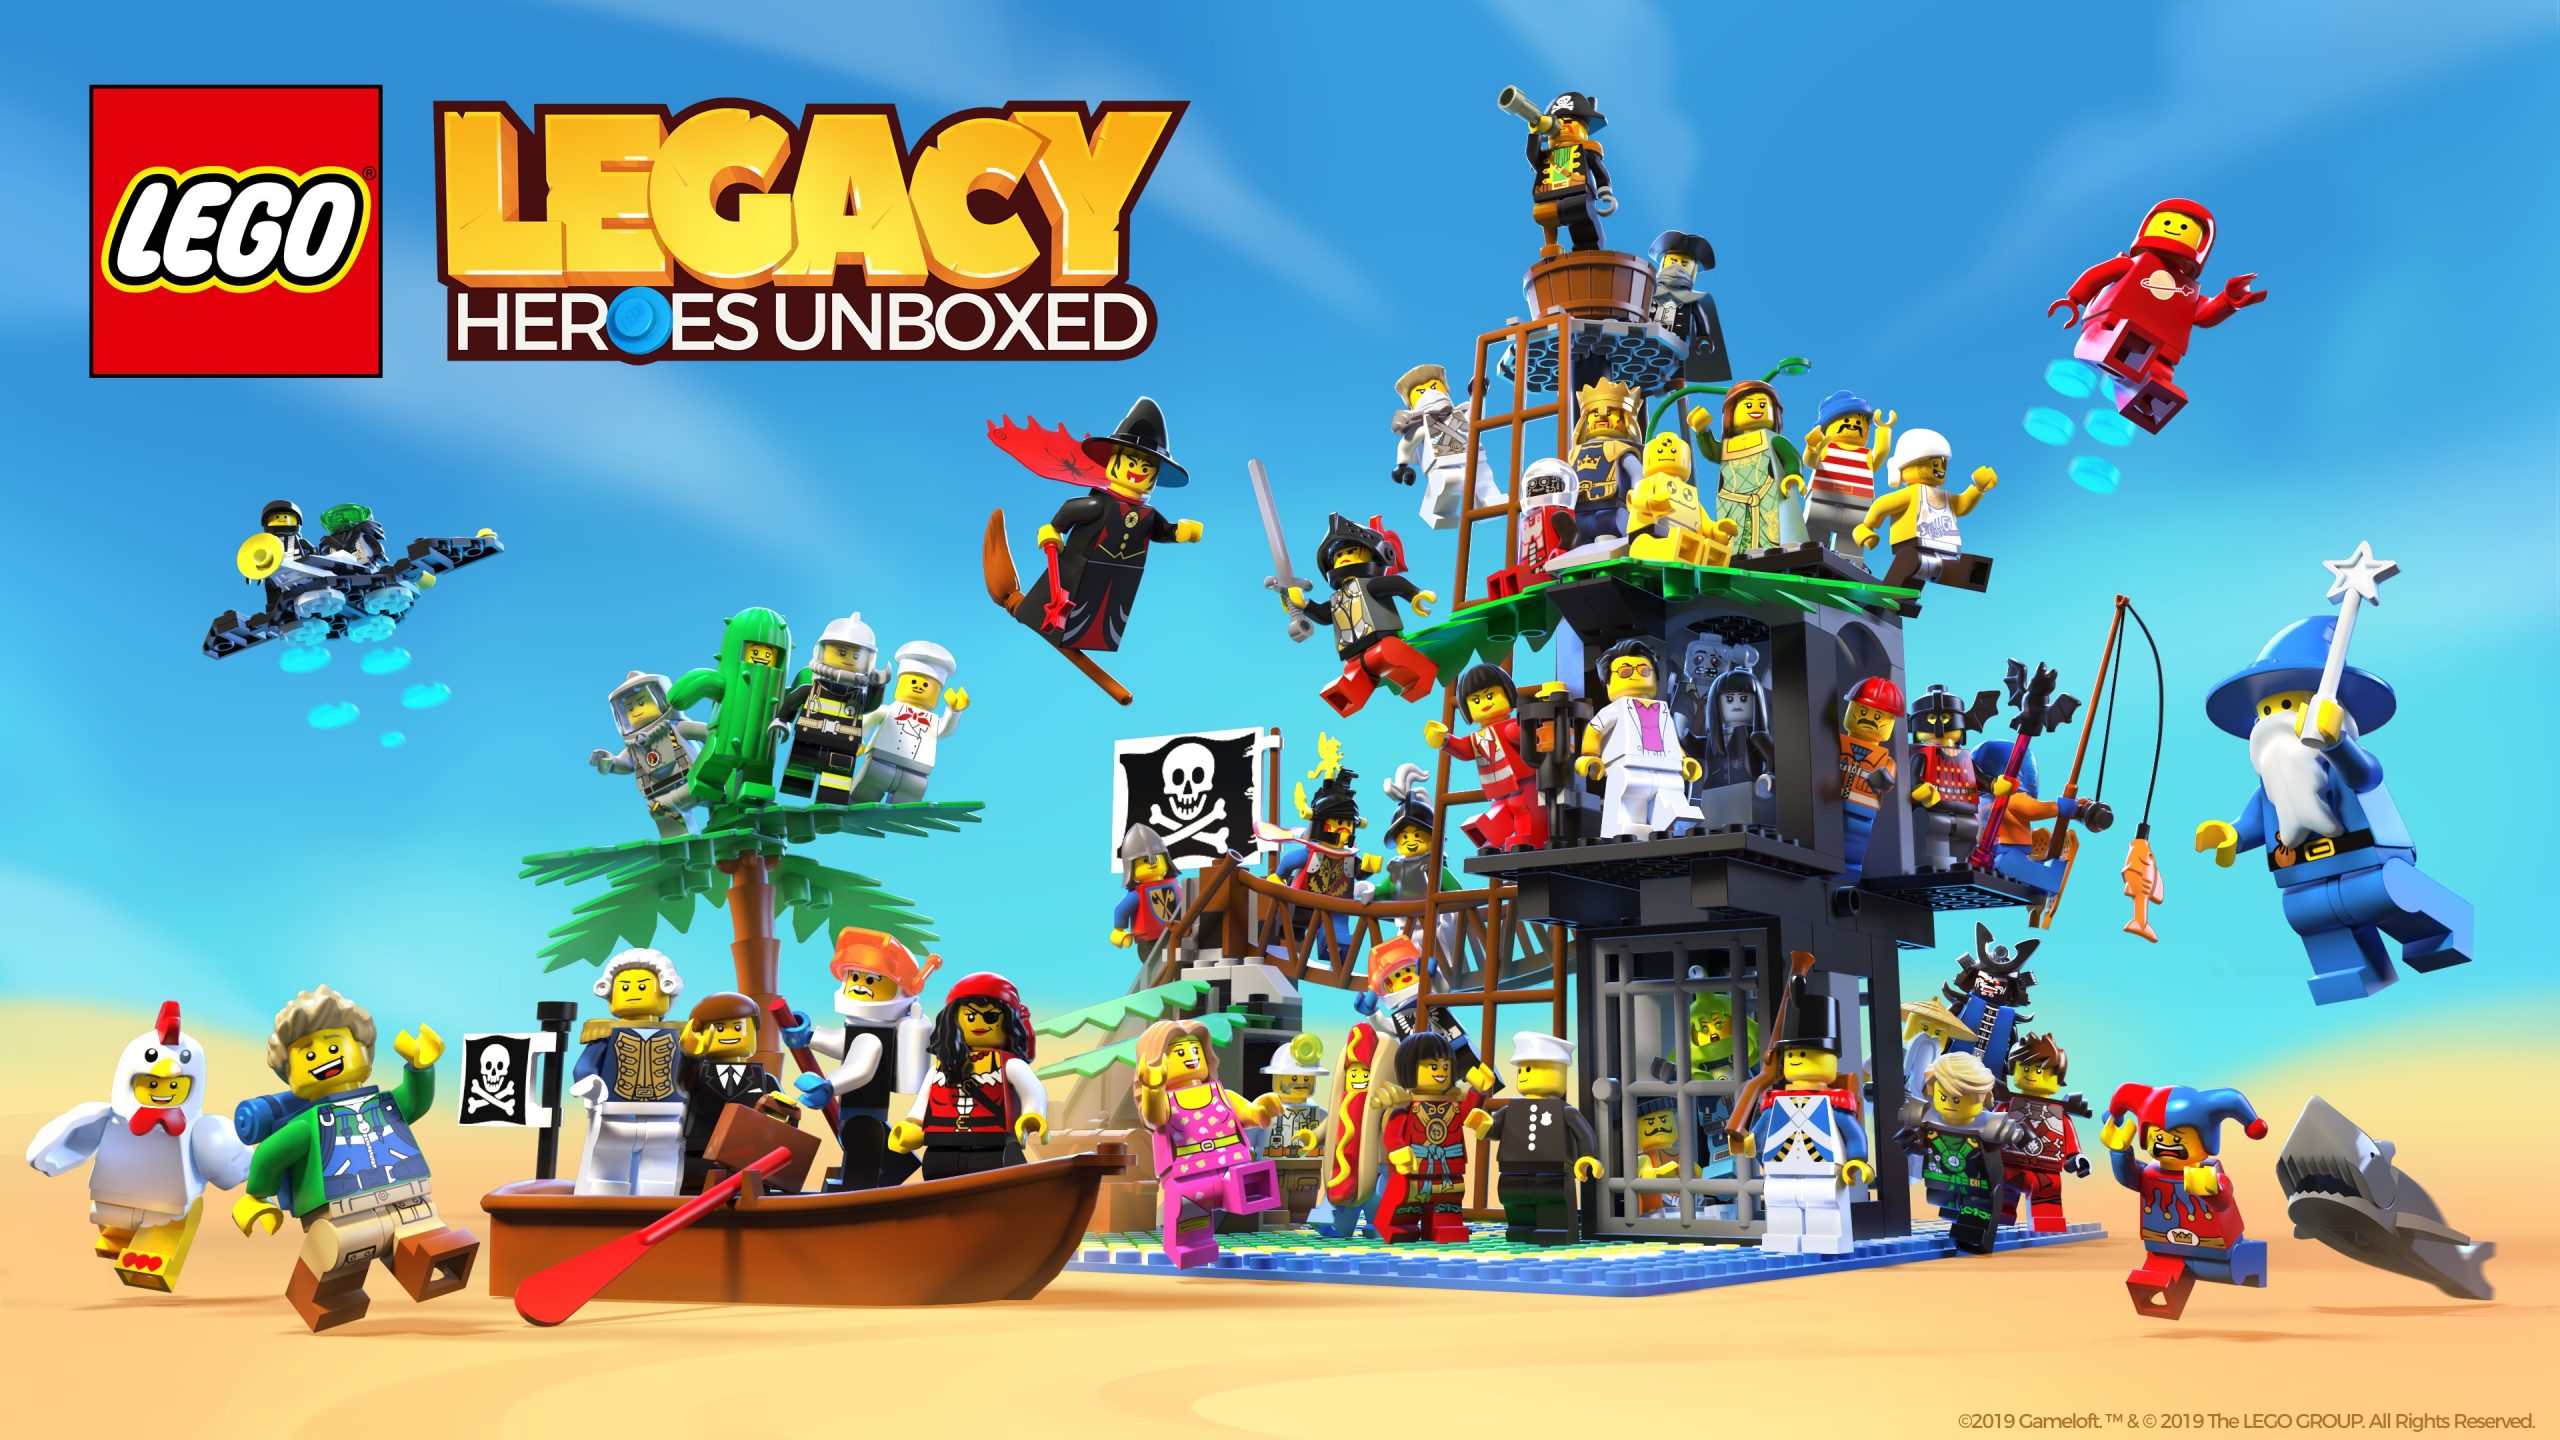 LEGO-Legacy-Heroes-Unboxed-Game-Art-Photo-scaled.jpg